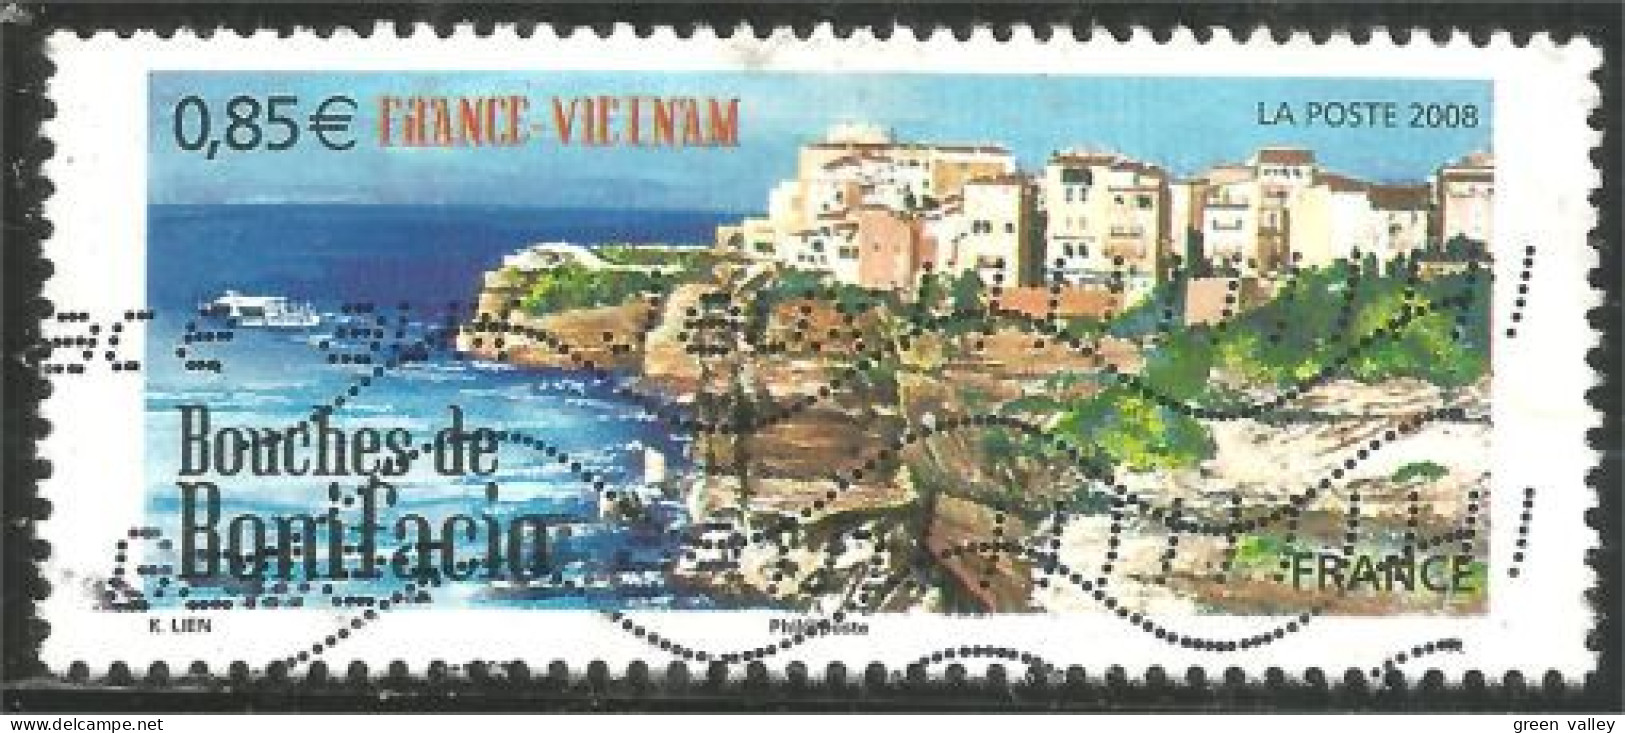 331eu-116 France Vietnam Bouches Bonifacio - Used Stamps